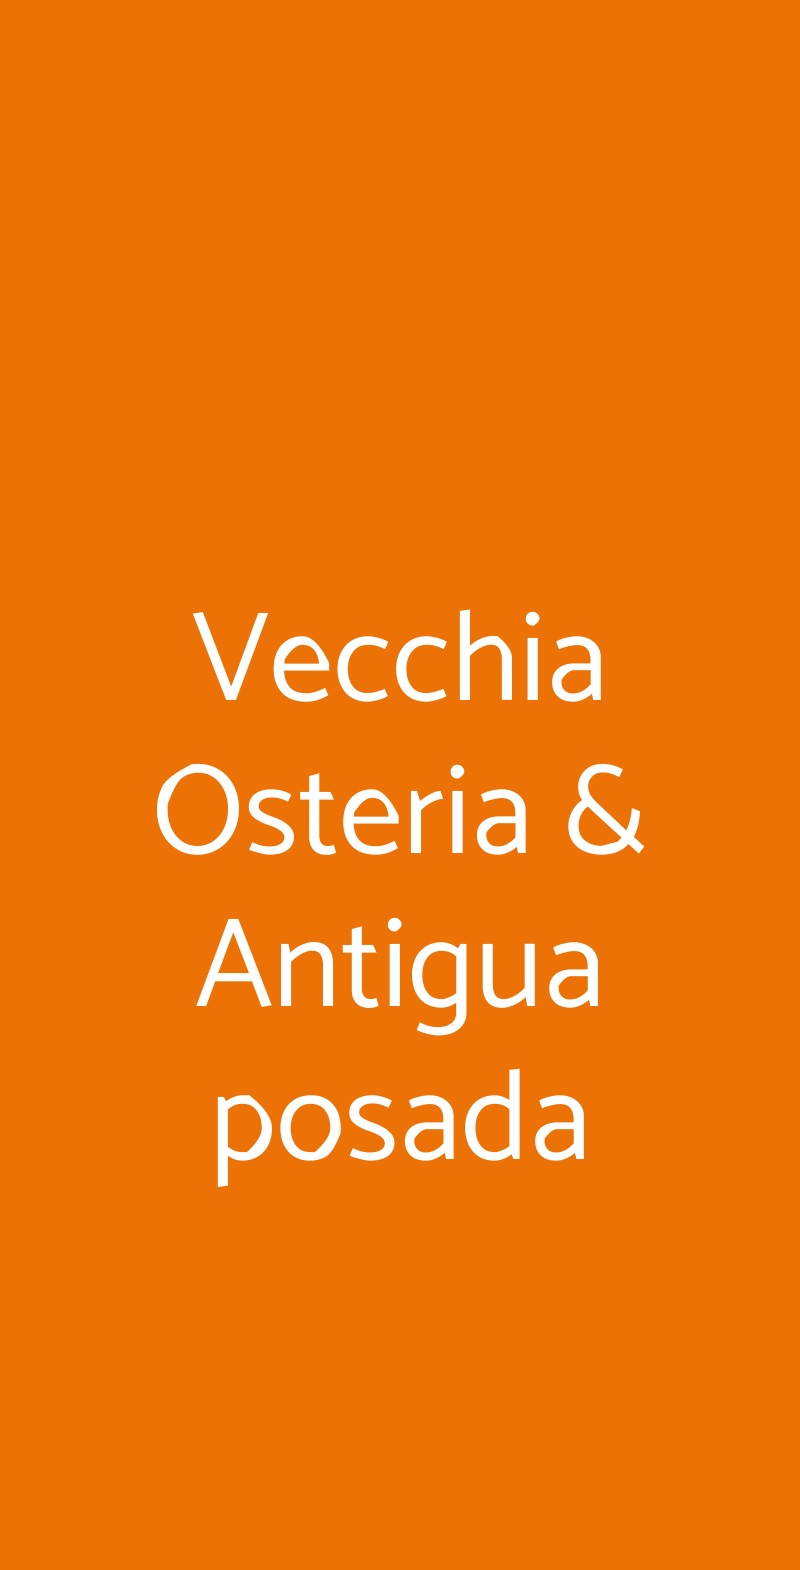 Vecchia Osteria & Antigua posada Milano menù 1 pagina